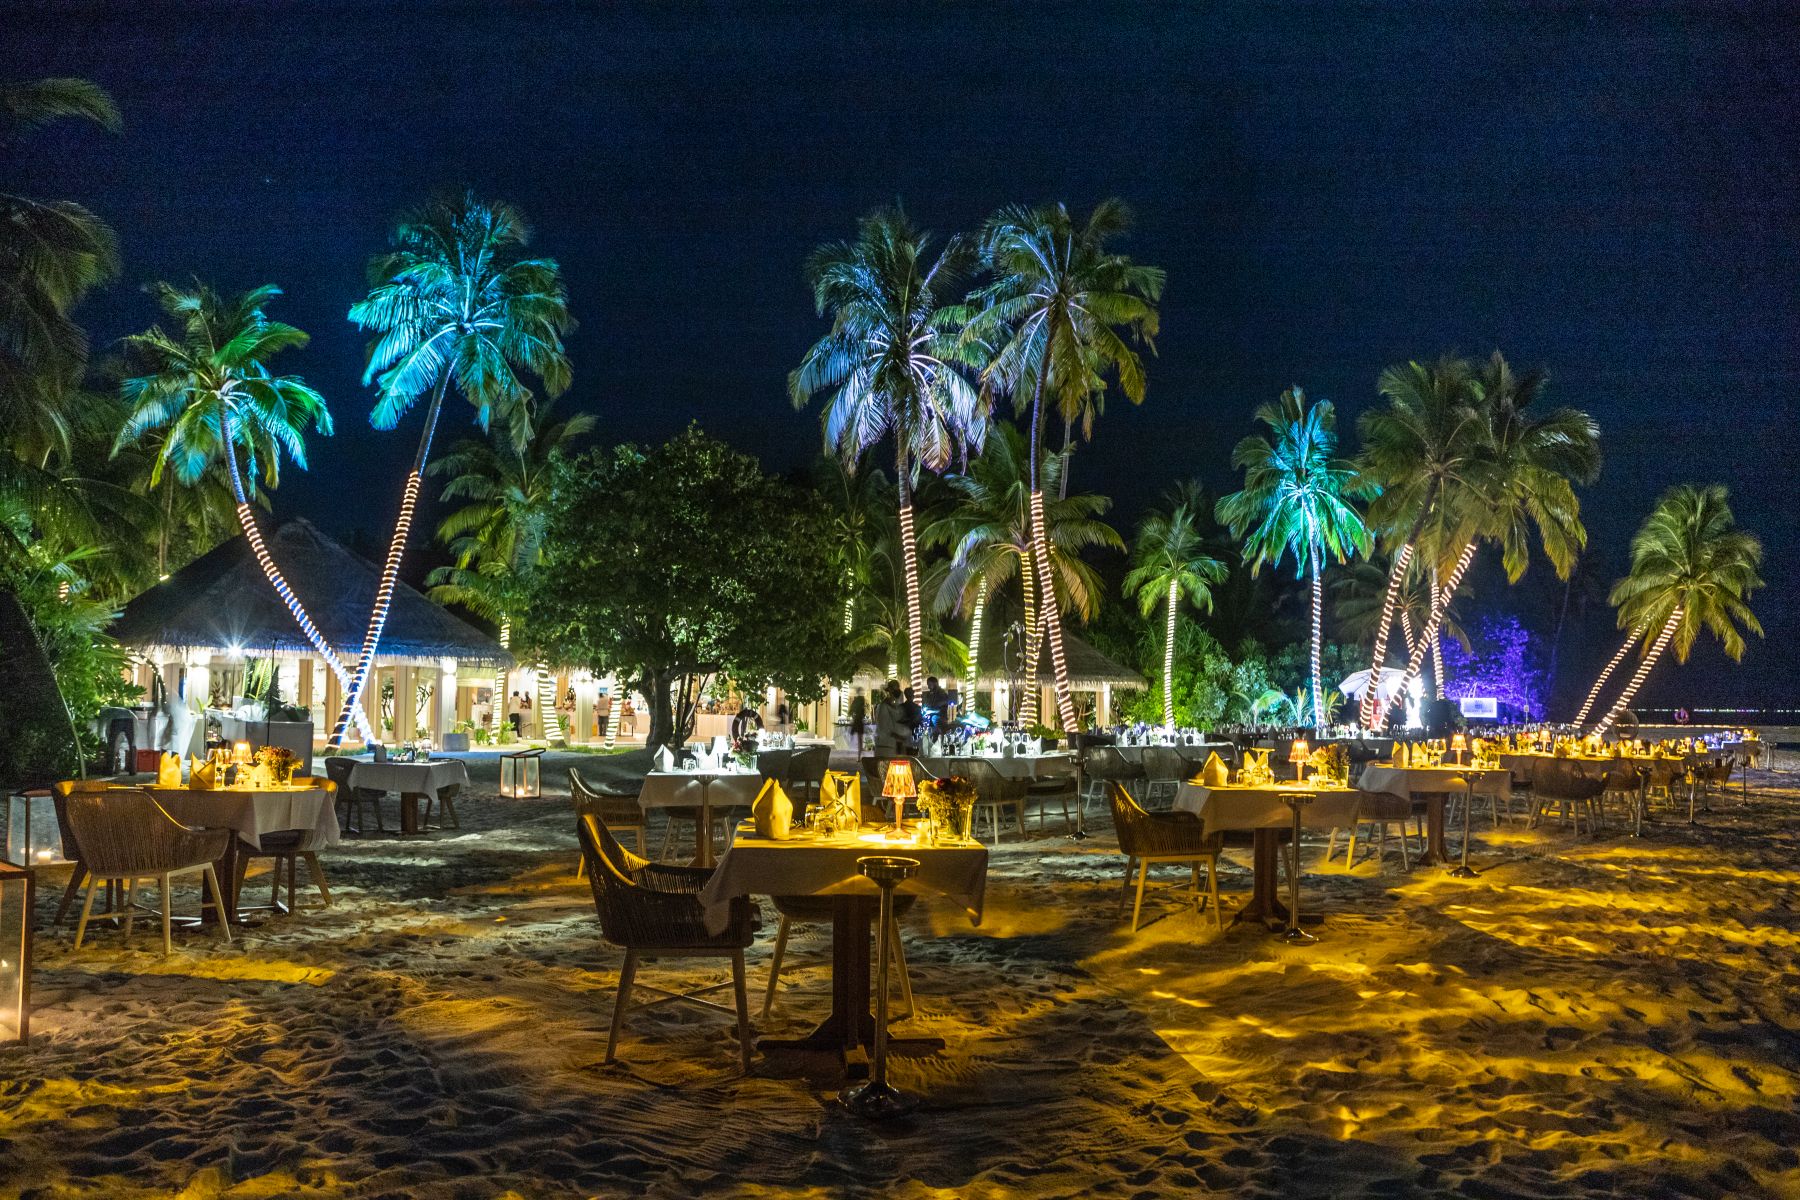 Baglioni Resort Maldives: Праздничный сезон 2021-2022